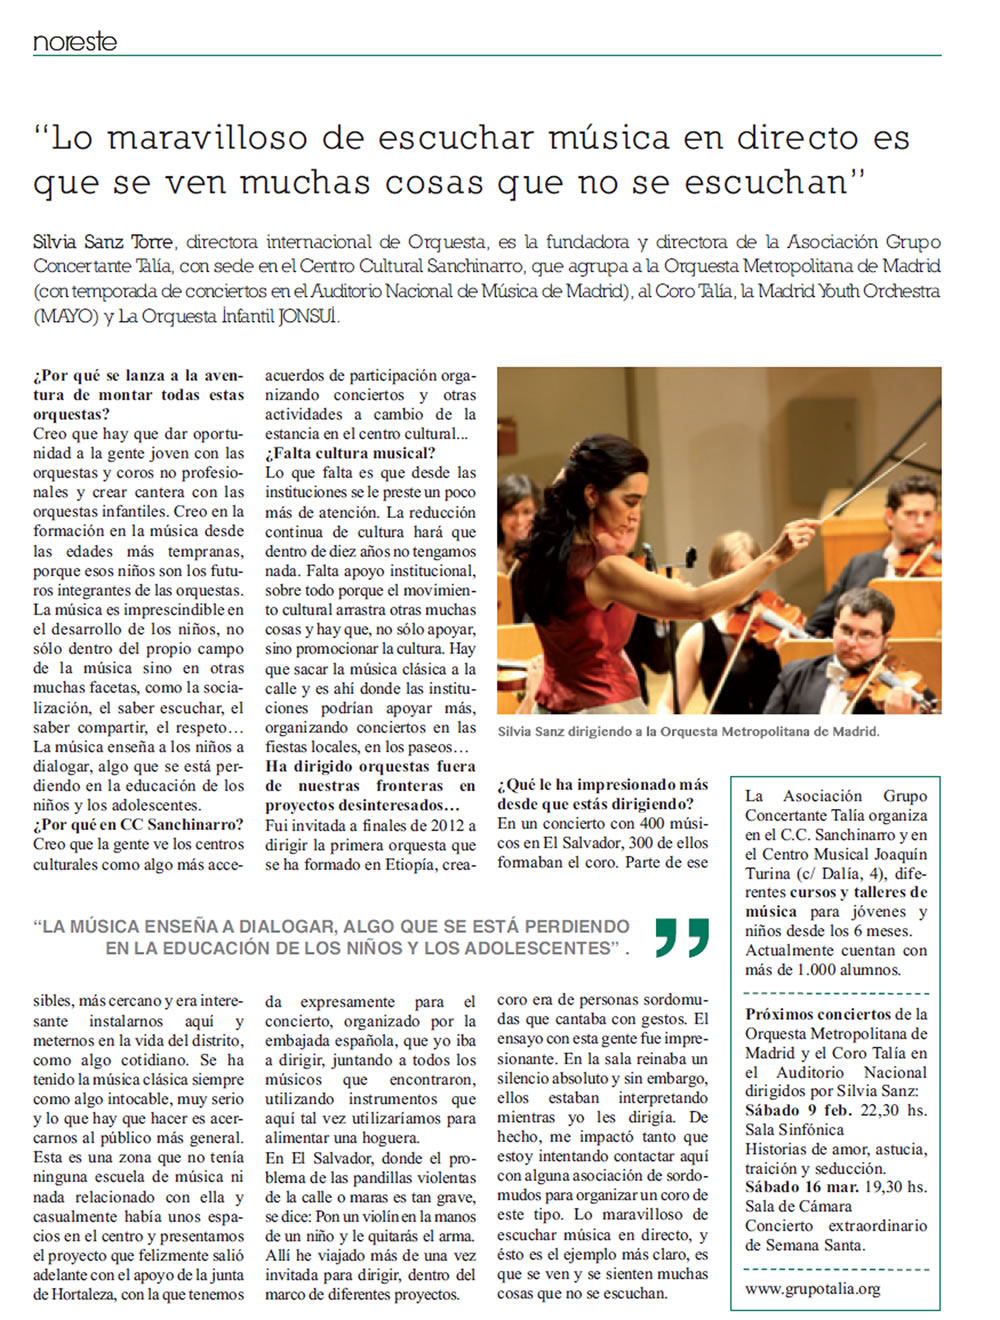 Entrevista a Silvia Sanz en la revista Placet (febrero 2013)